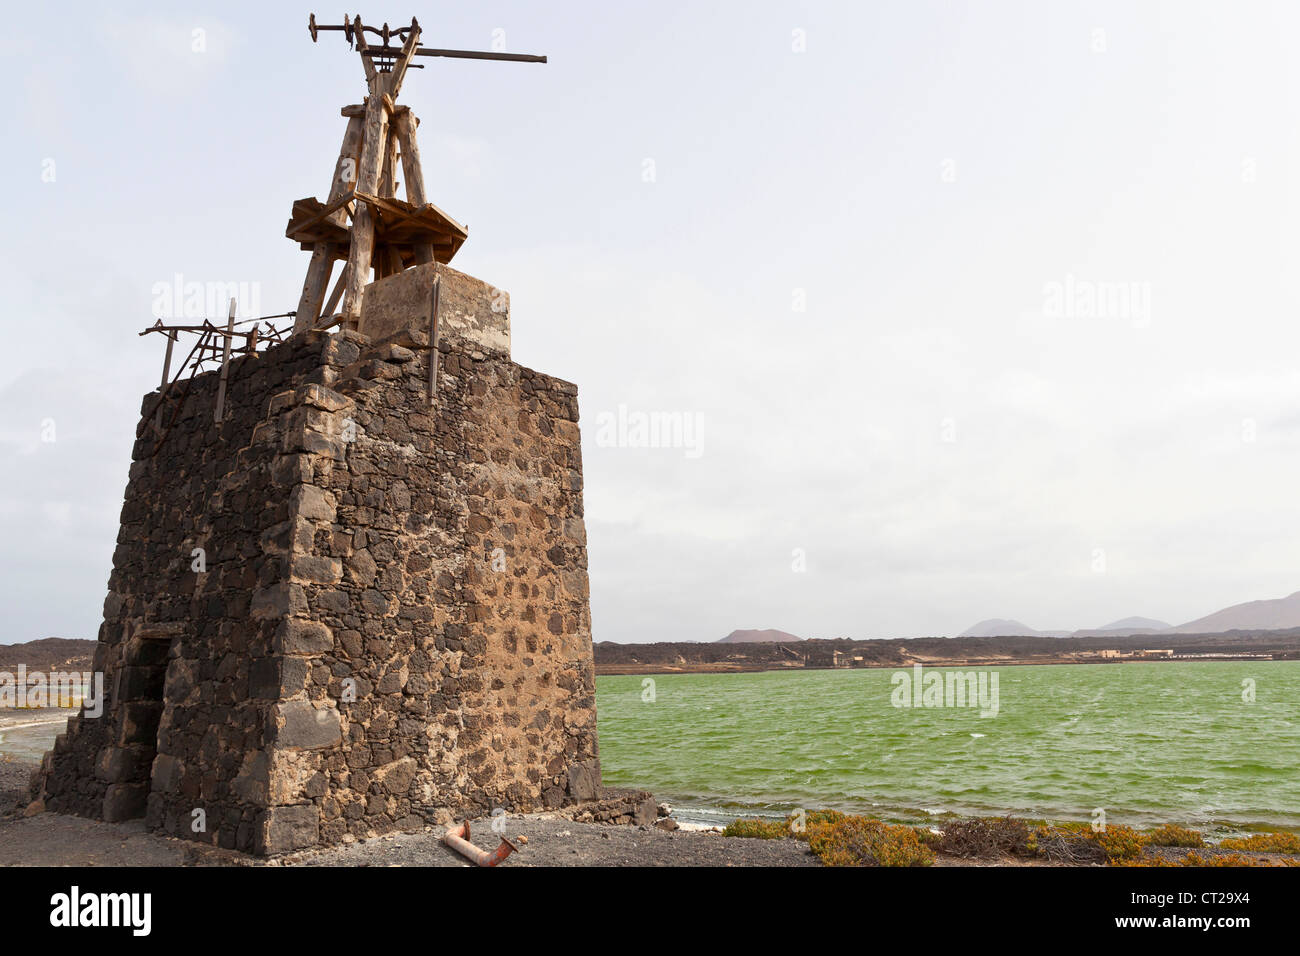 Lanzarote, Old windmill at the Salinas De Janubio salt basins - Lanzarote, Canary Islands, Spain, Europe Stock Photo